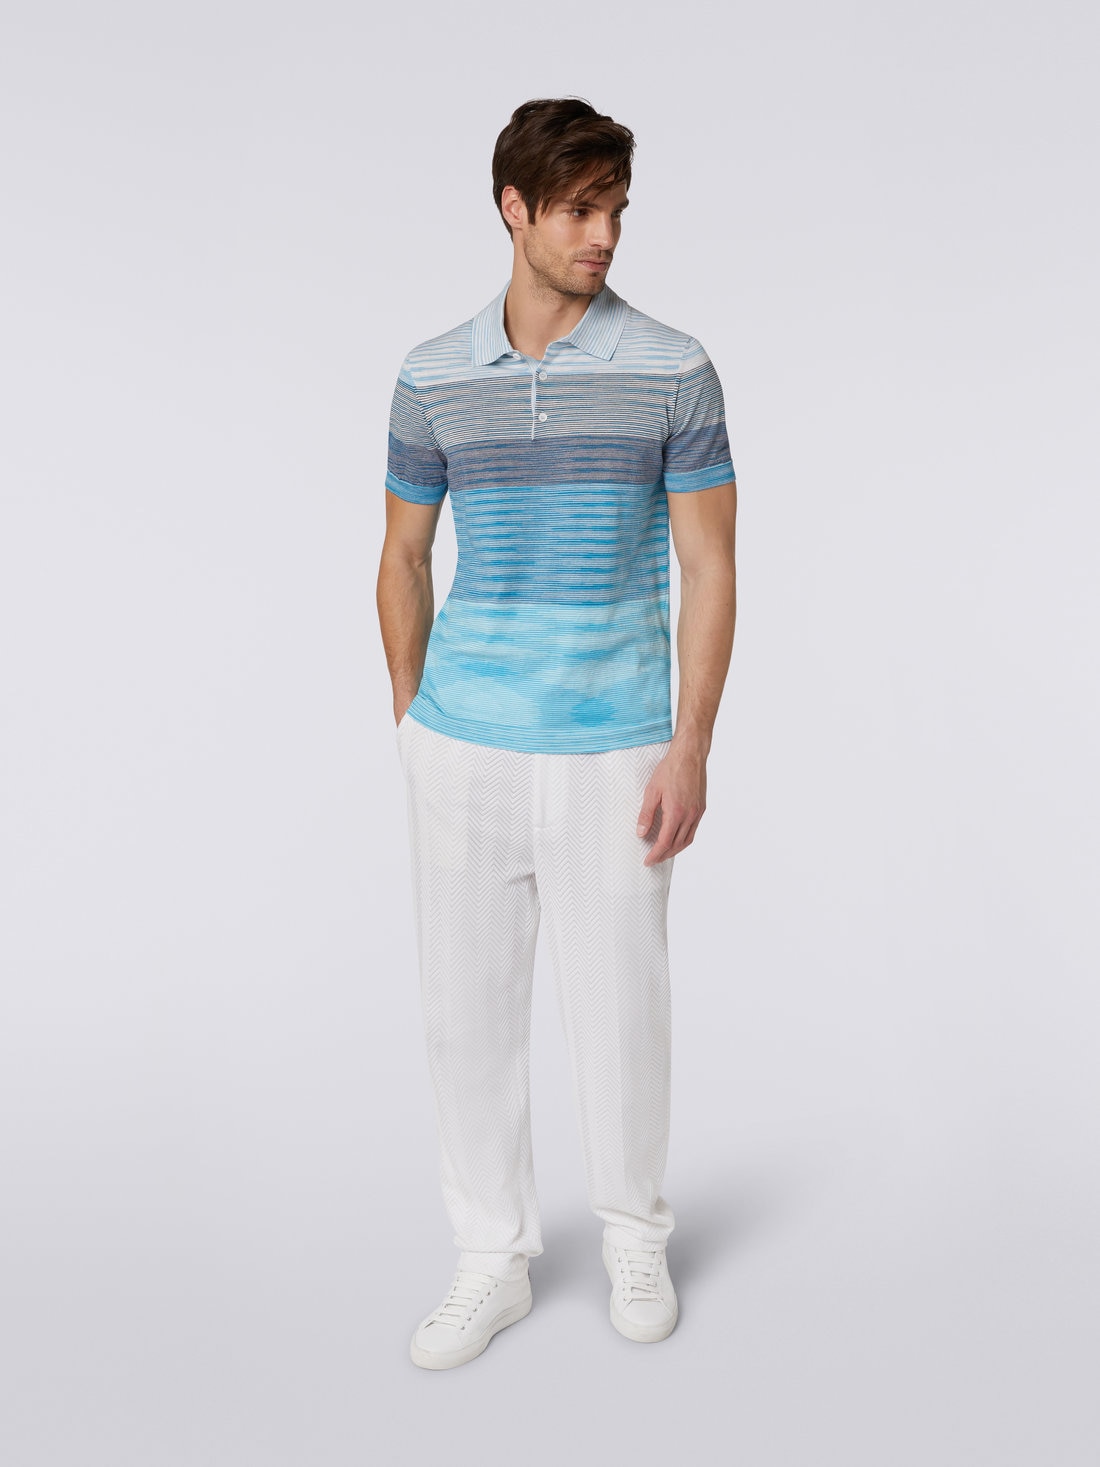 Dégradé striped cotton short-sleeved polo shirt, White & Light Blue - US23S20PBK012QS7294 - 1